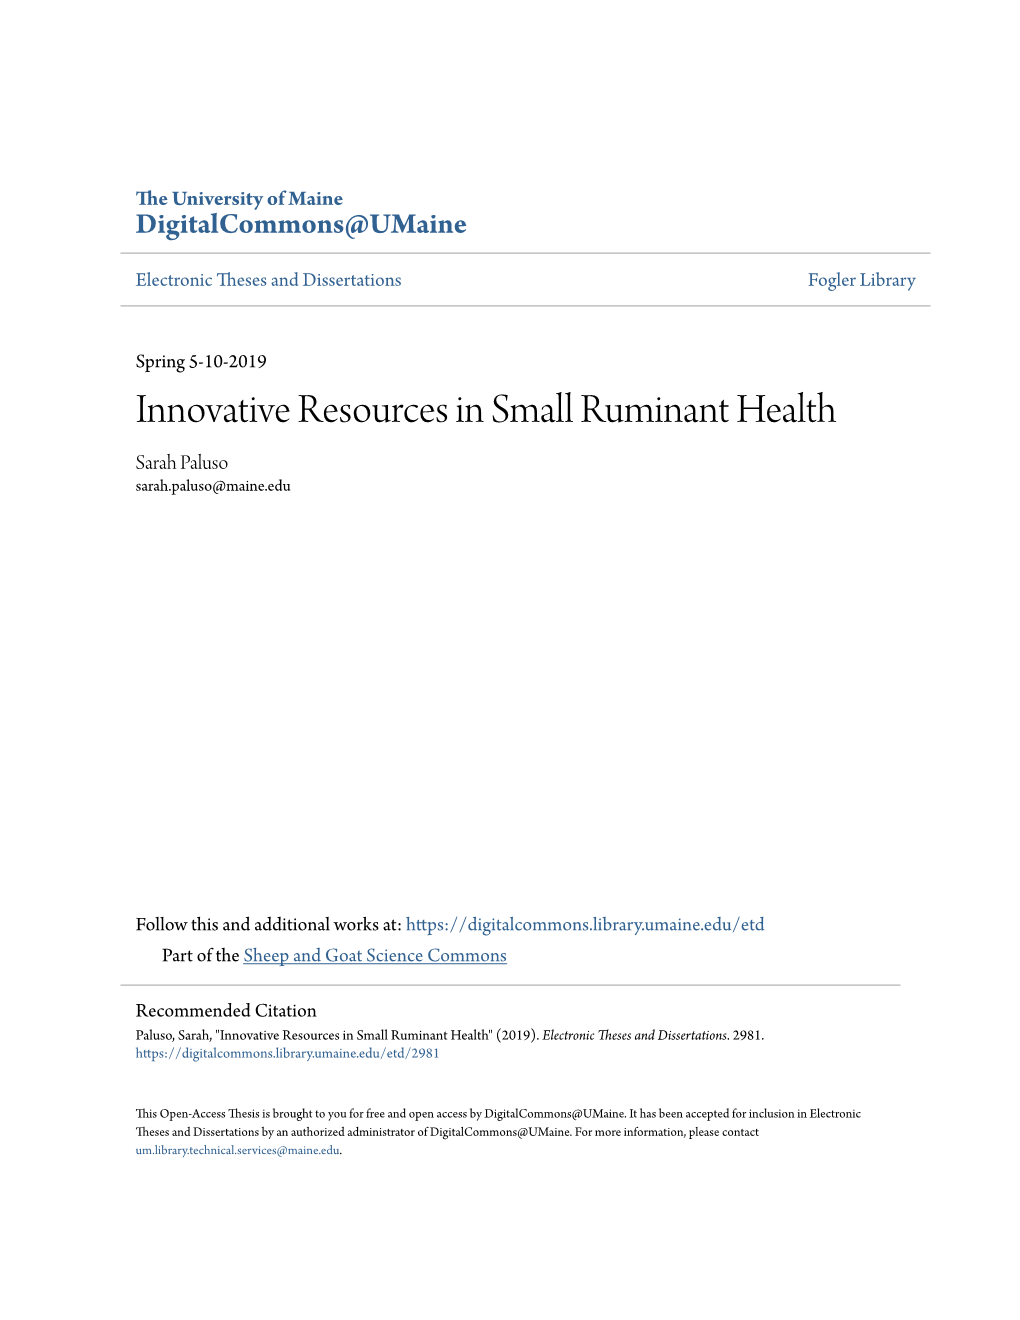 Innovative Resources in Small Ruminant Health Sarah Paluso Sarah.Paluso@Maine.Edu